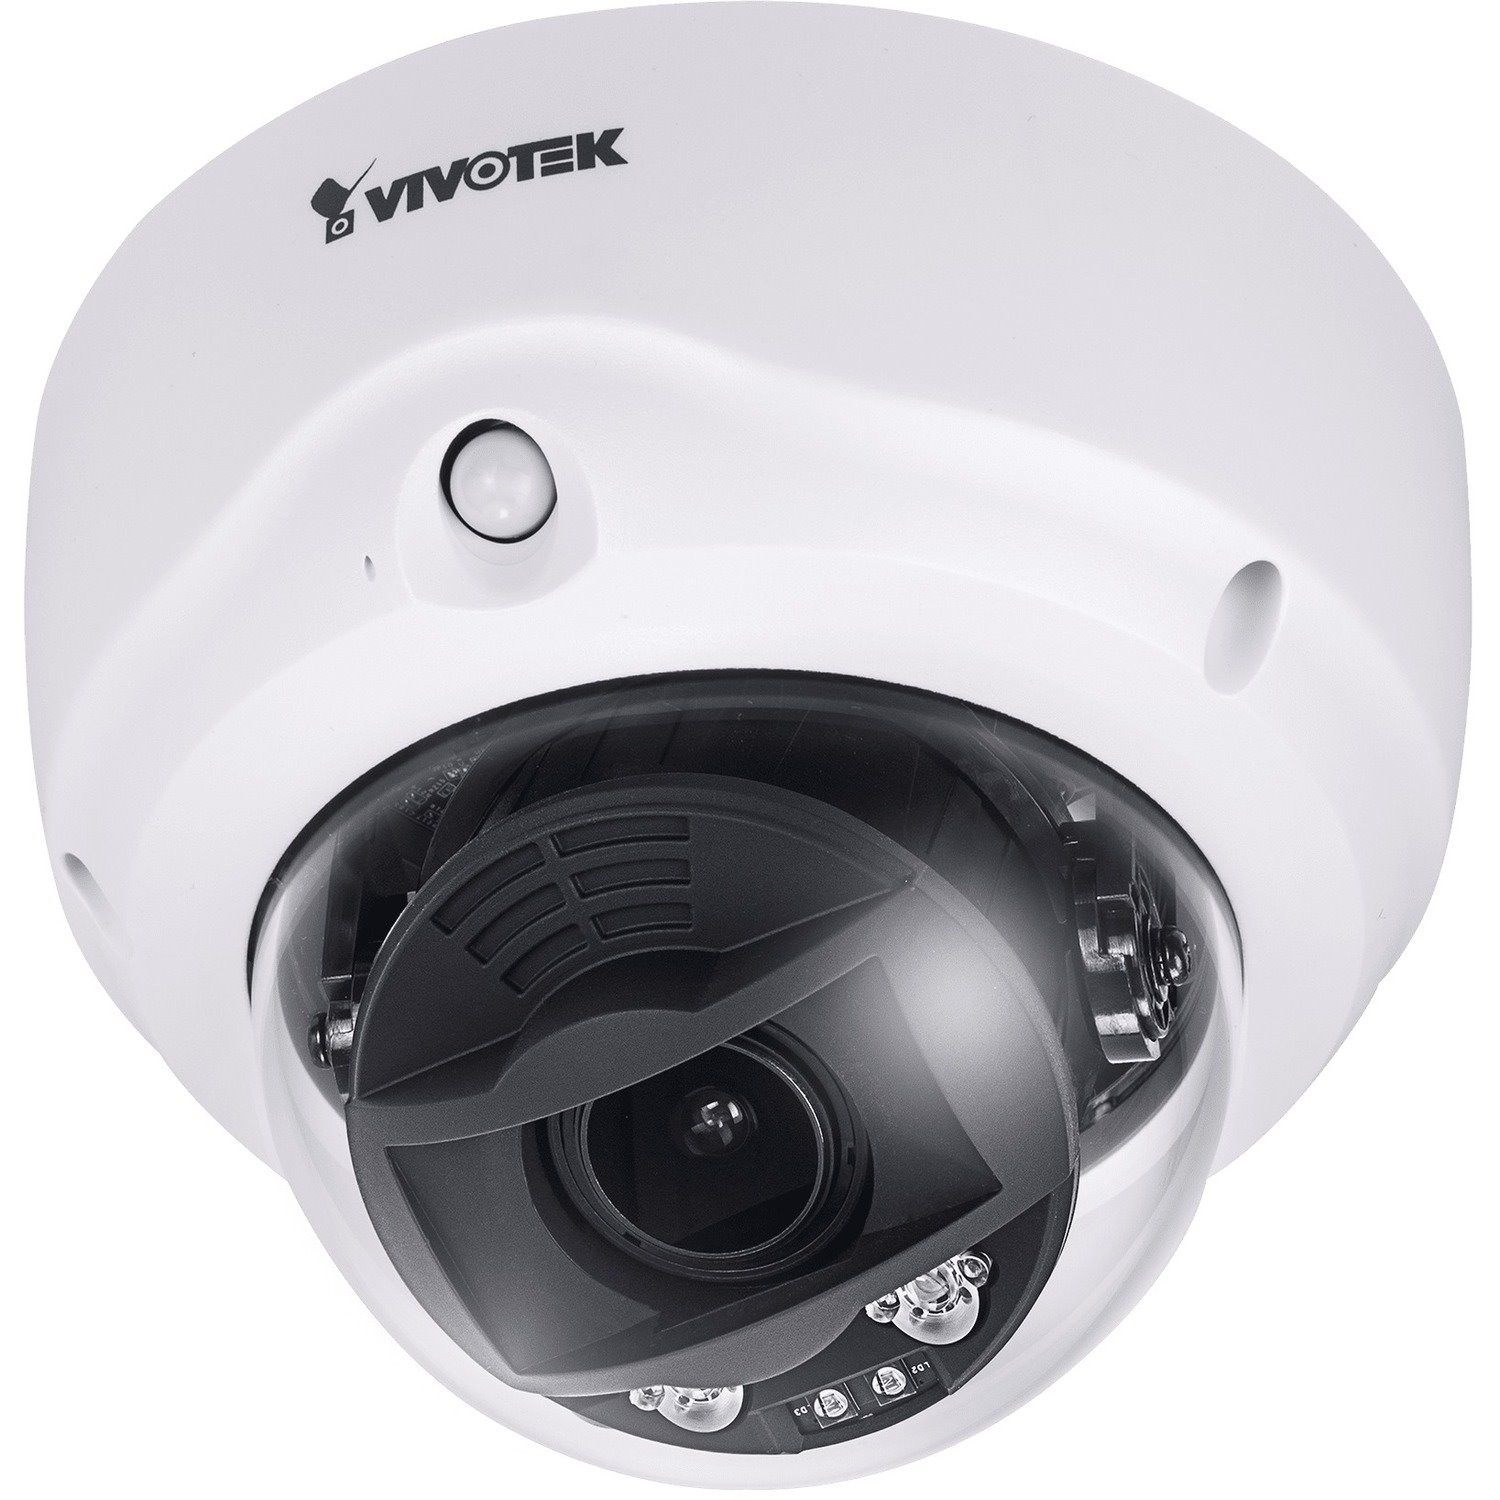 Vivotek FD9165-HT 2 Megapixel Indoor HD Network Camera - Color - Dome - TAA Compliant